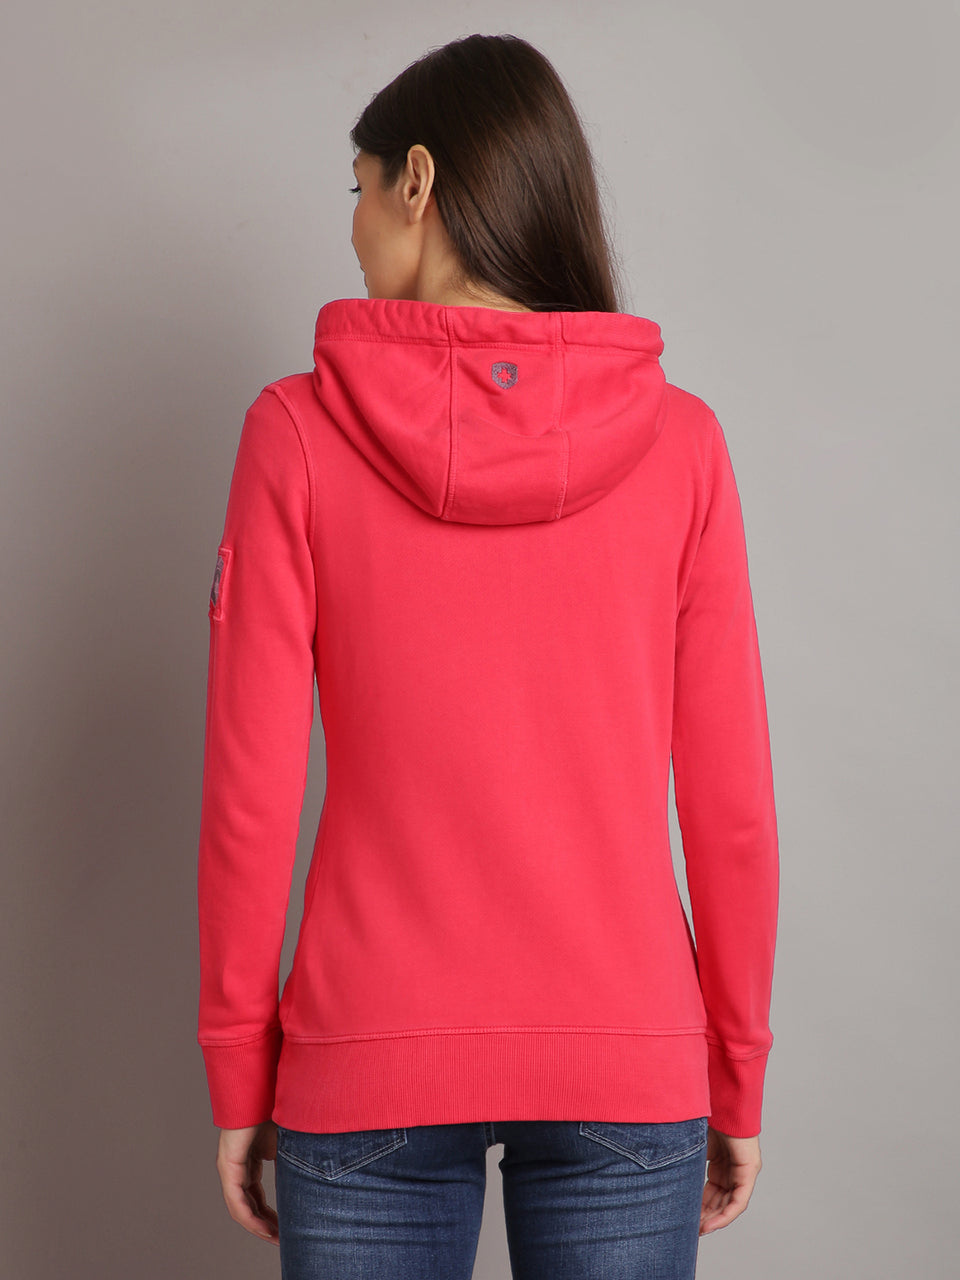 women red embroidered zip hooded sweatshirt